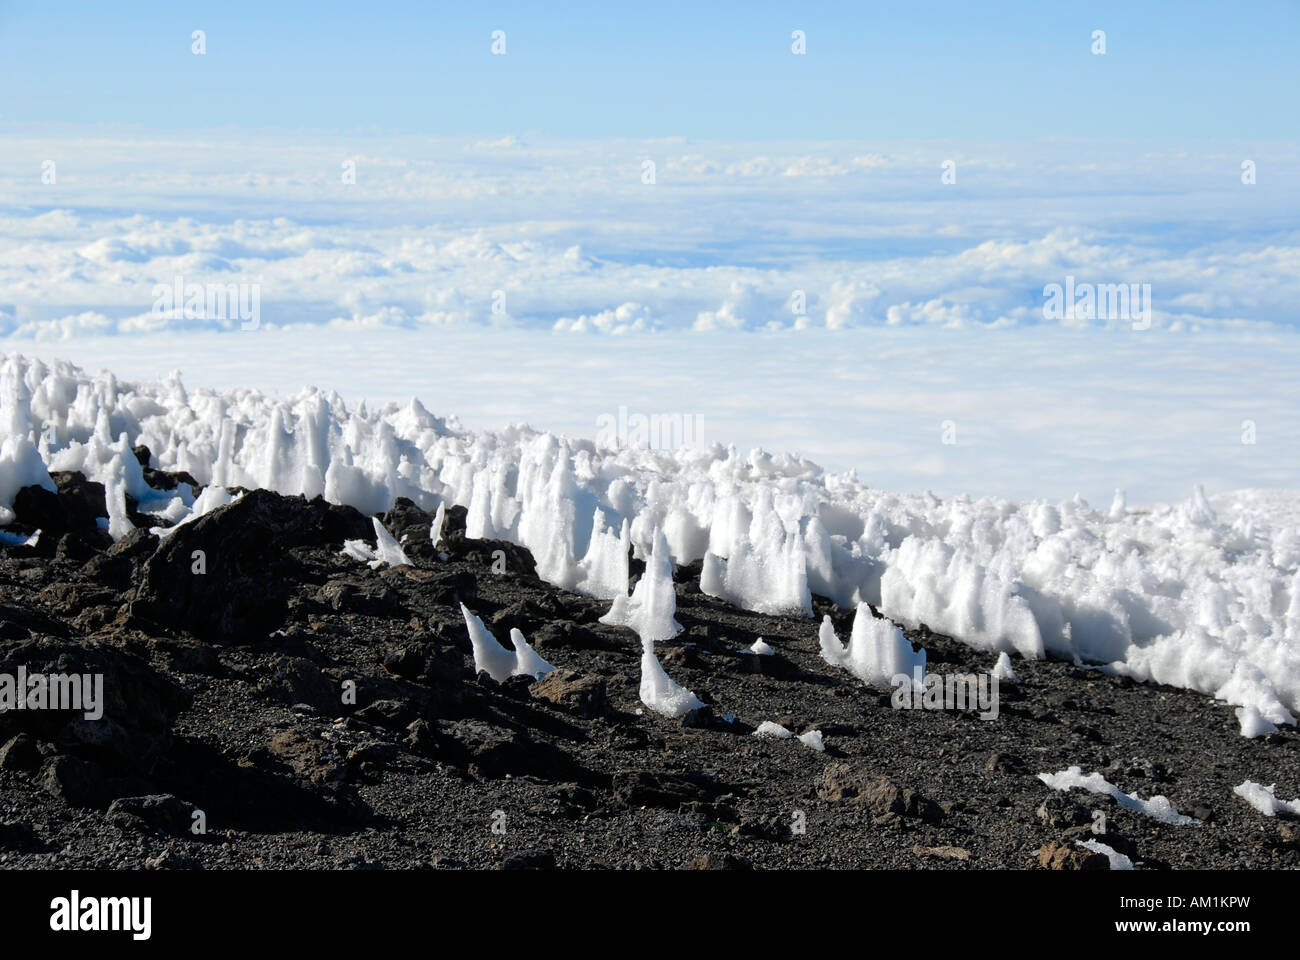 Bizarr harsh snow at crater rim Kilimanjaro Tanzania Stock Photo